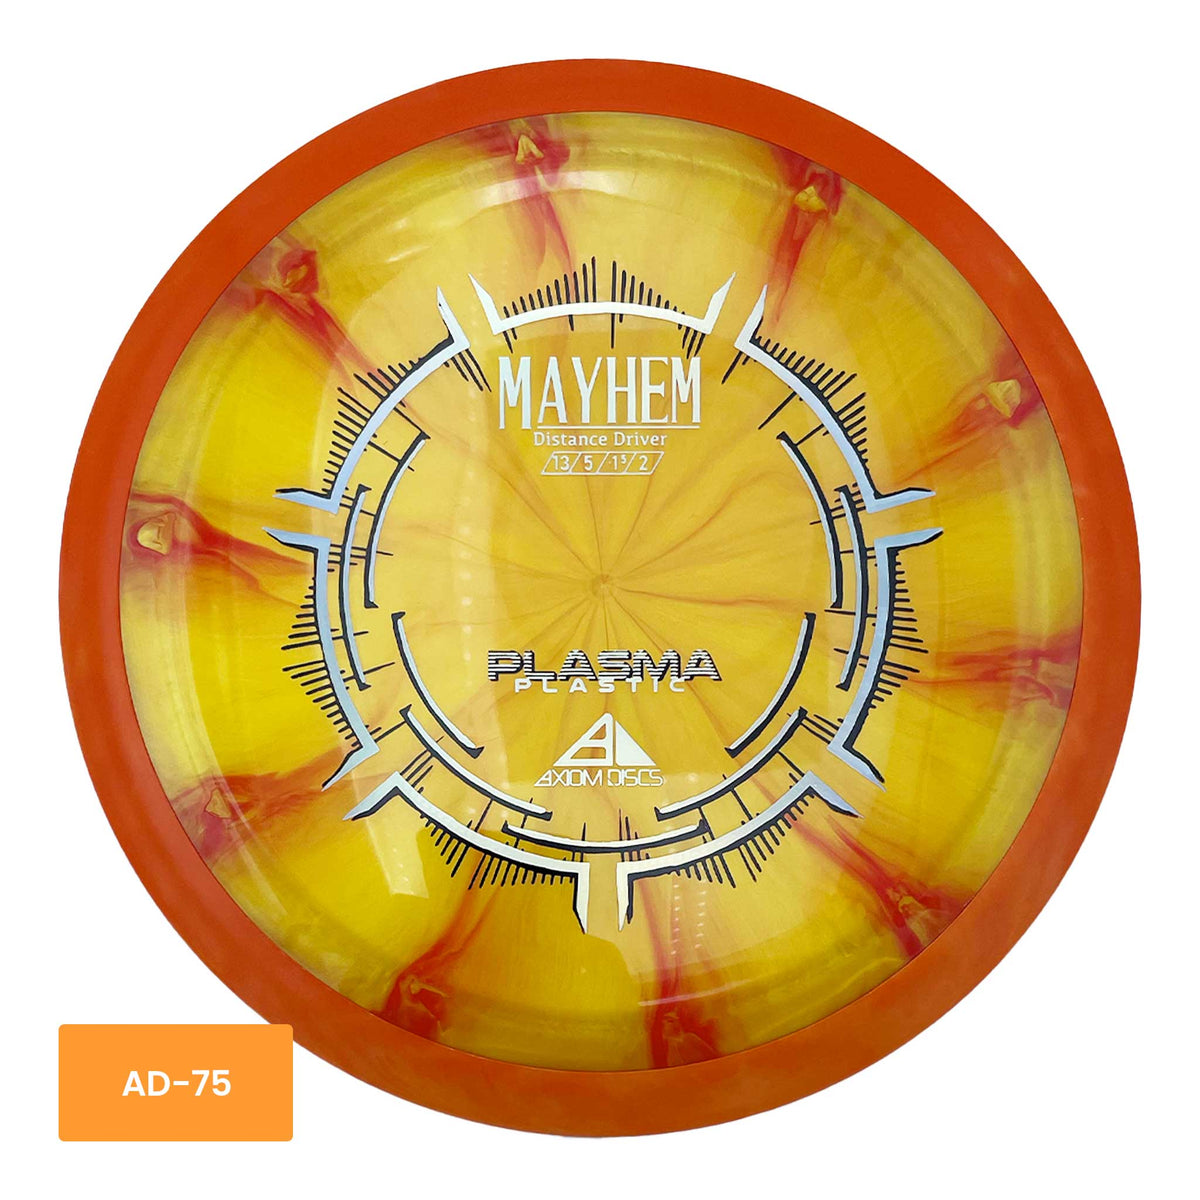 Axiom Discs Plasma Mayhem distance driver - Orange